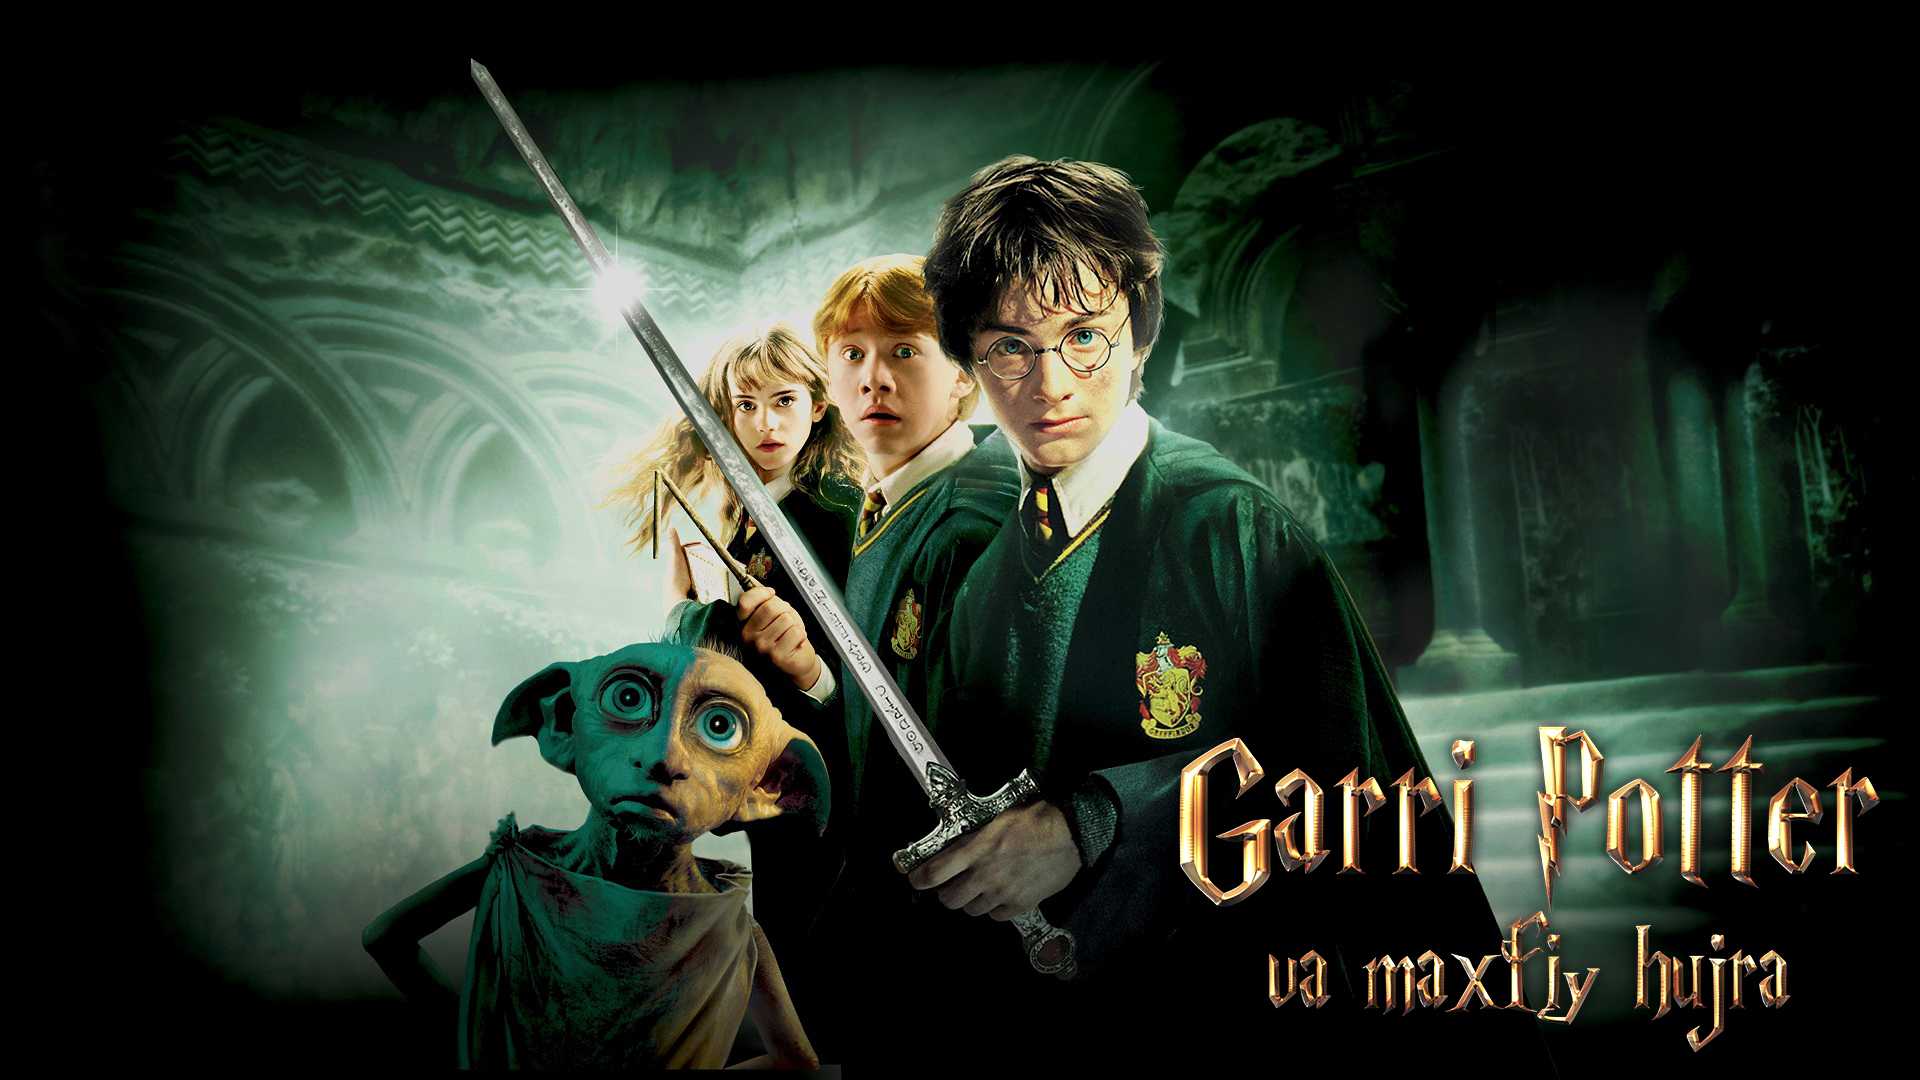 Garri Potter va maxfiy hujra